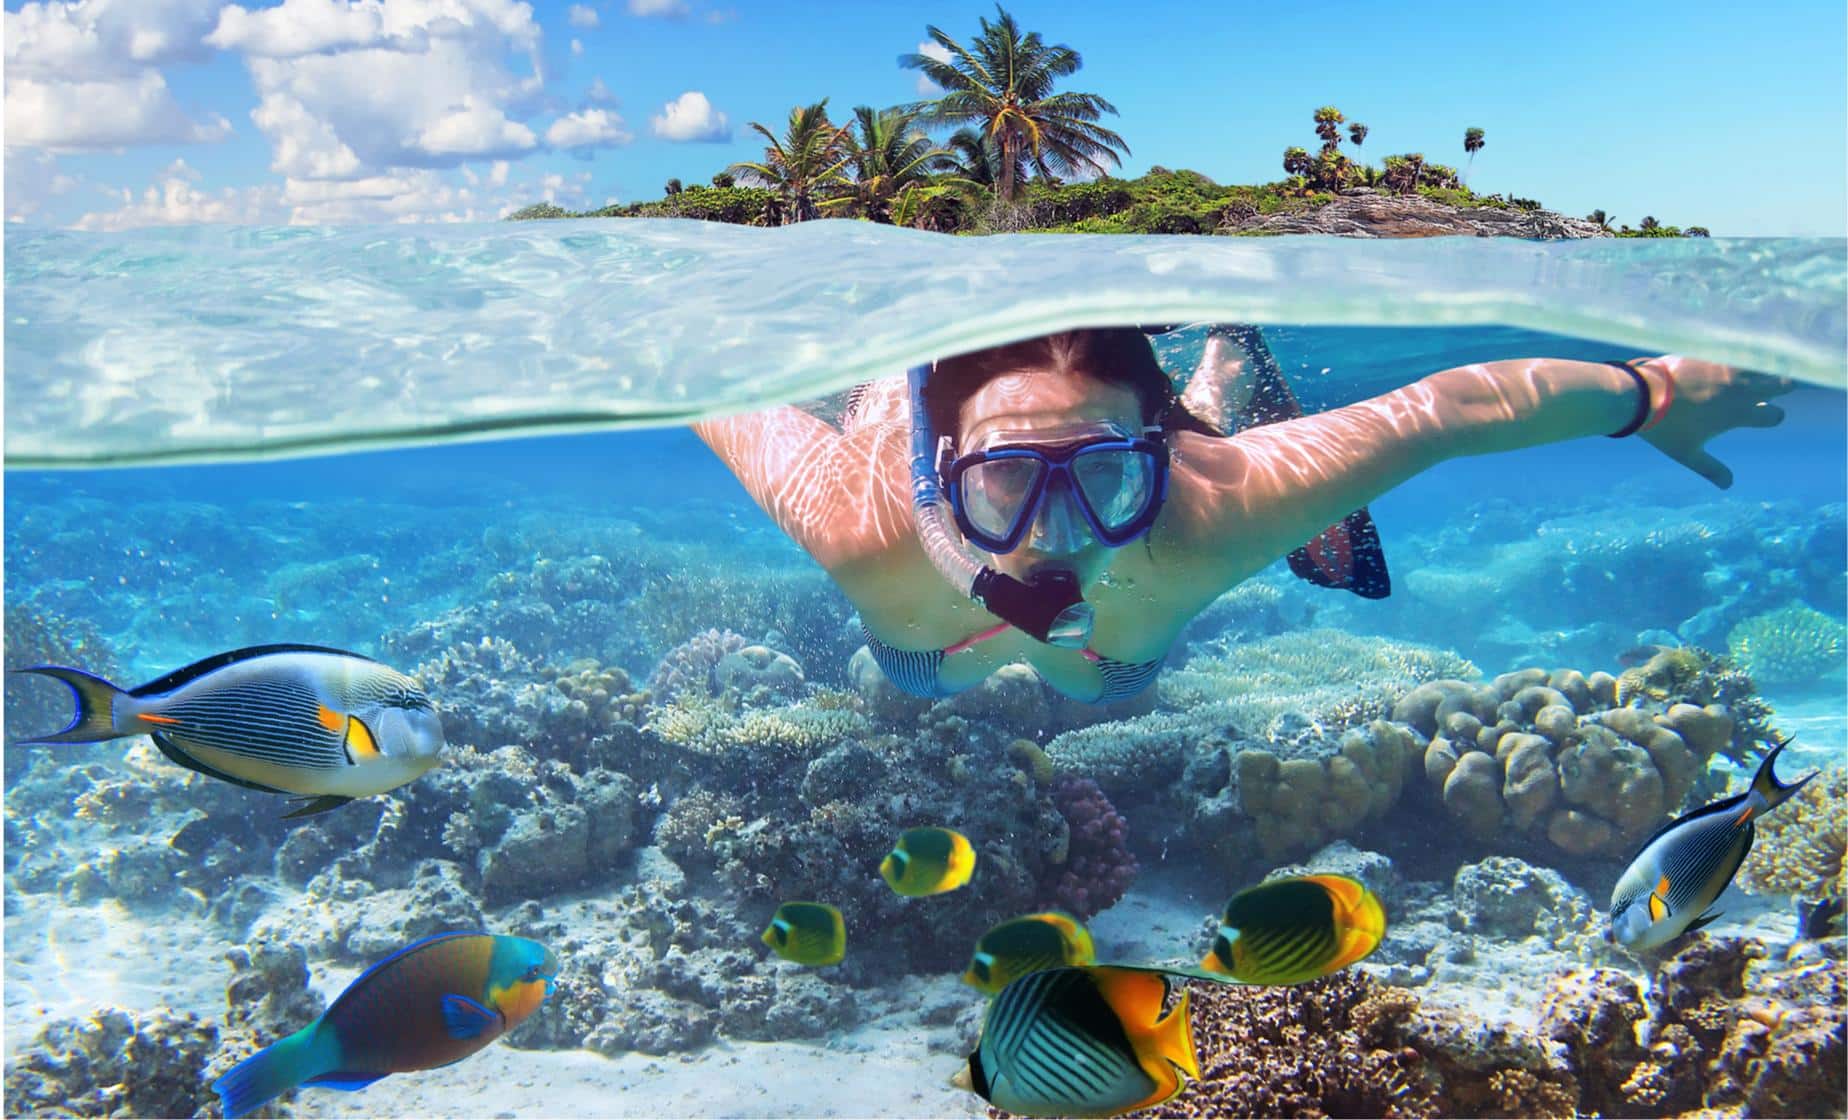  Is Aruba Good For Snorkeling